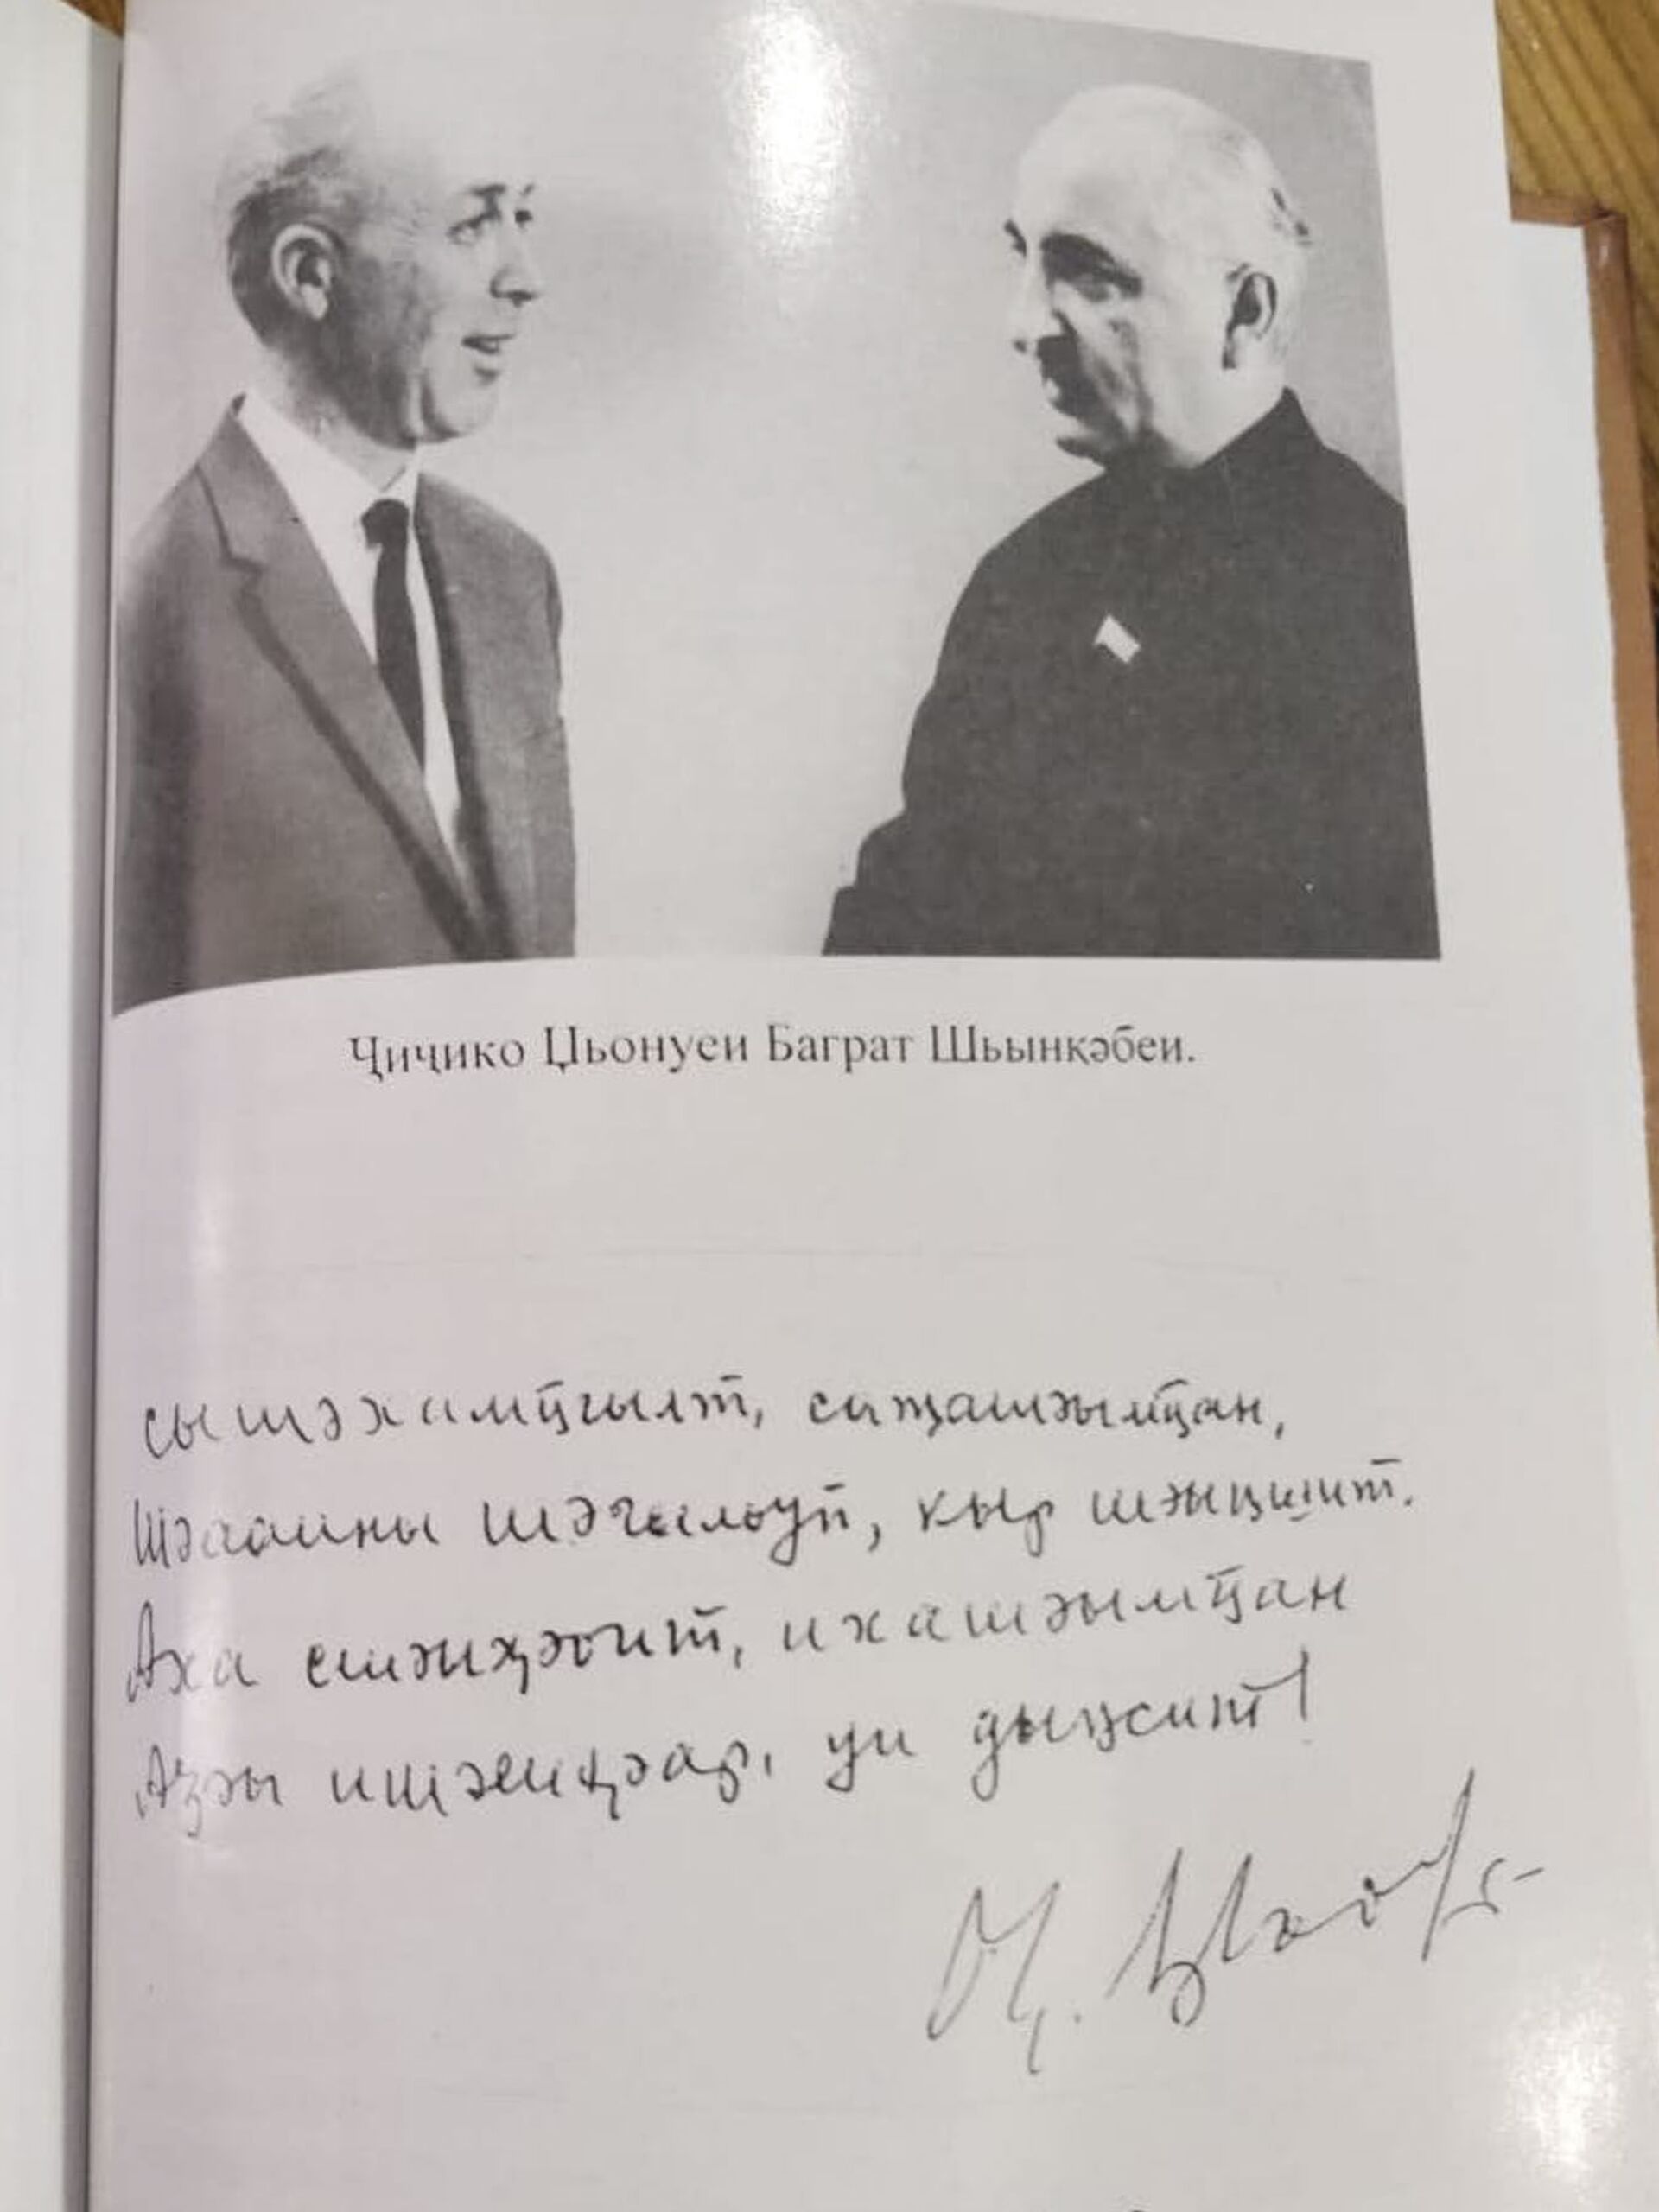 Ҳаԥсадгьыл ду аҭынчра азаазгаз: Ҷиҷико Џьонуа игәаларшәаразы - Sputnik Аҧсны, 1920, 27.05.2021